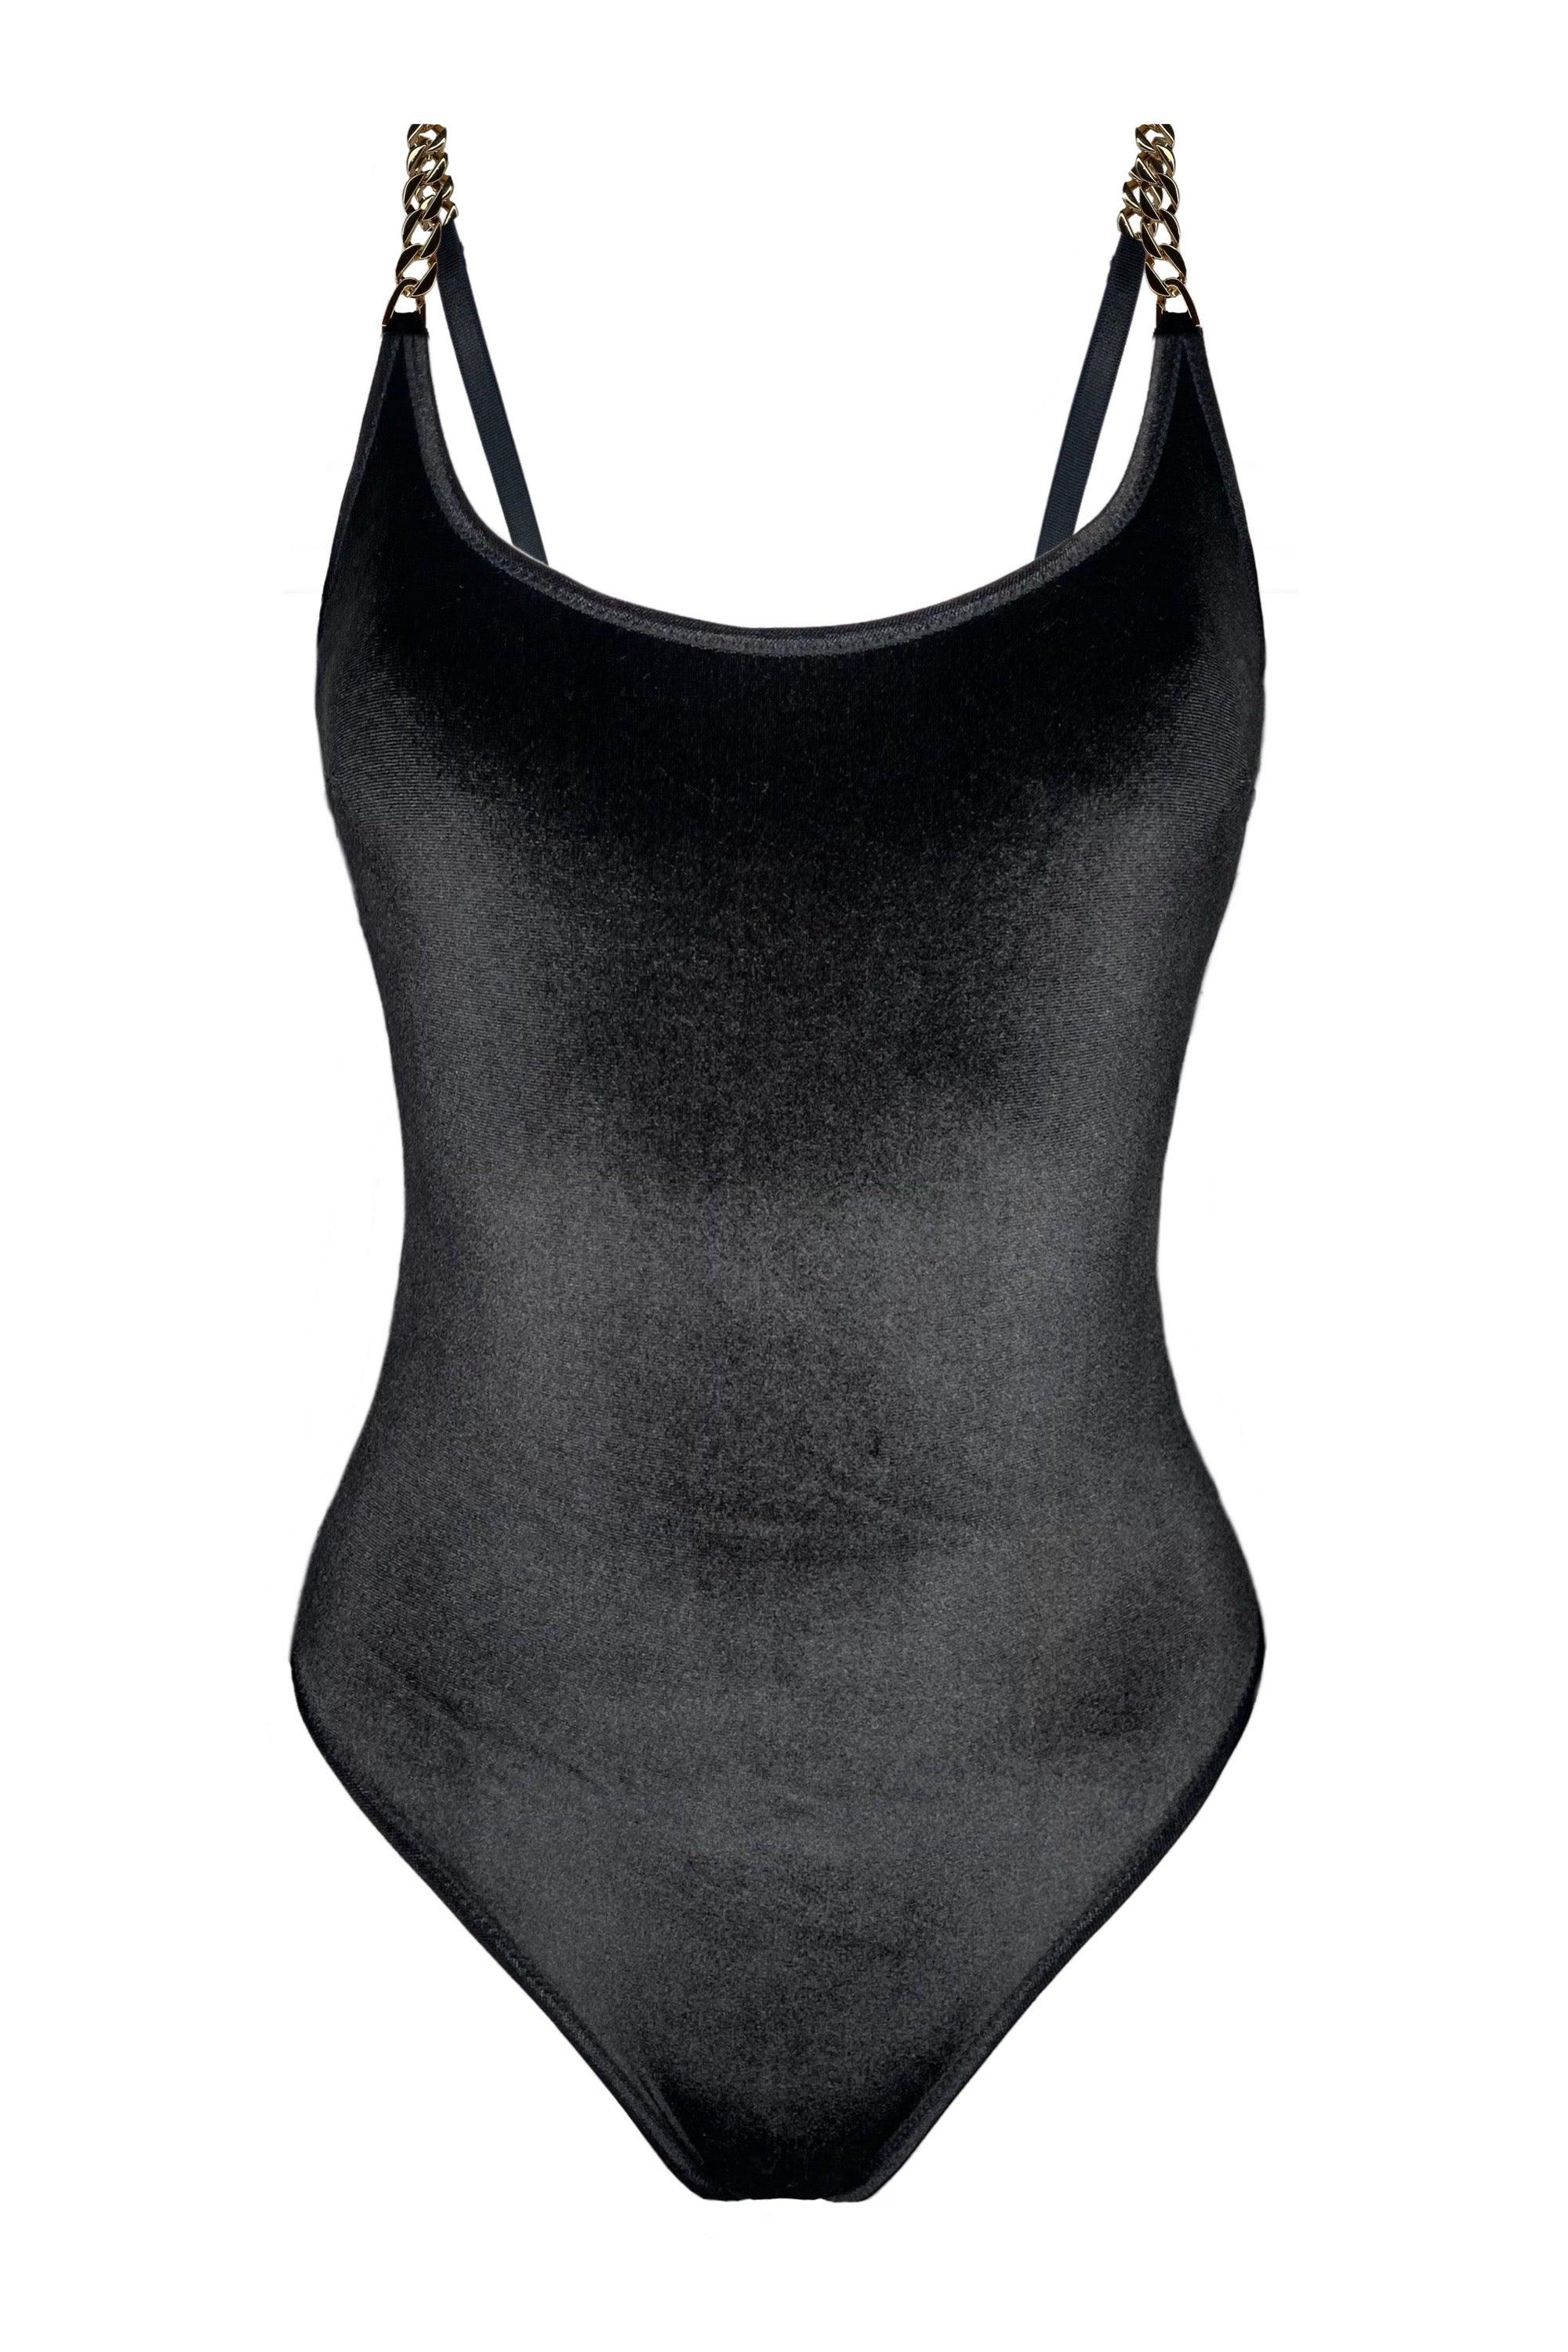 Velvetta black bodysuit with chains